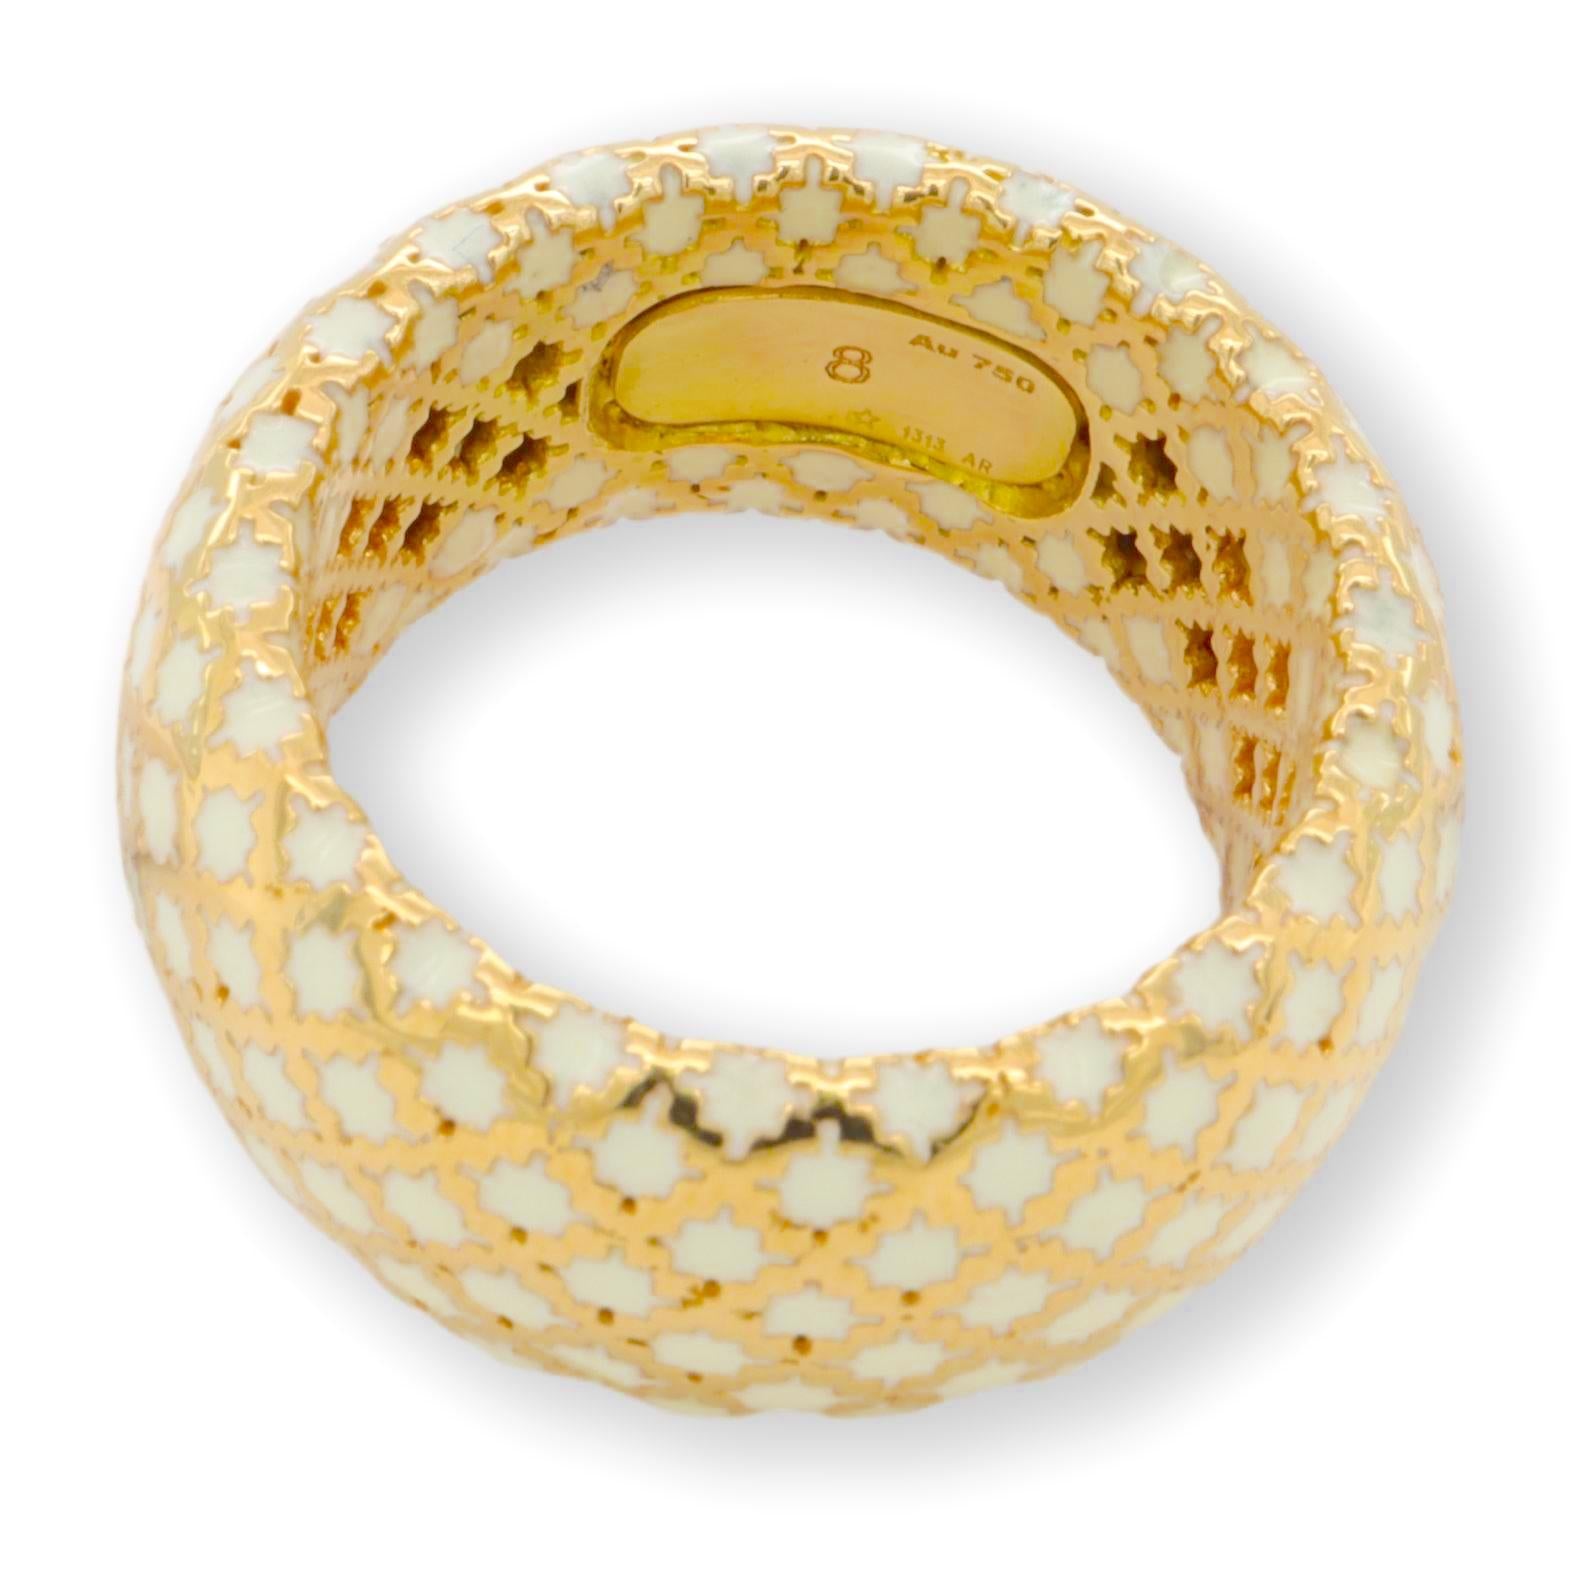 Gucci Diamantissima Ring in Metallic for Men